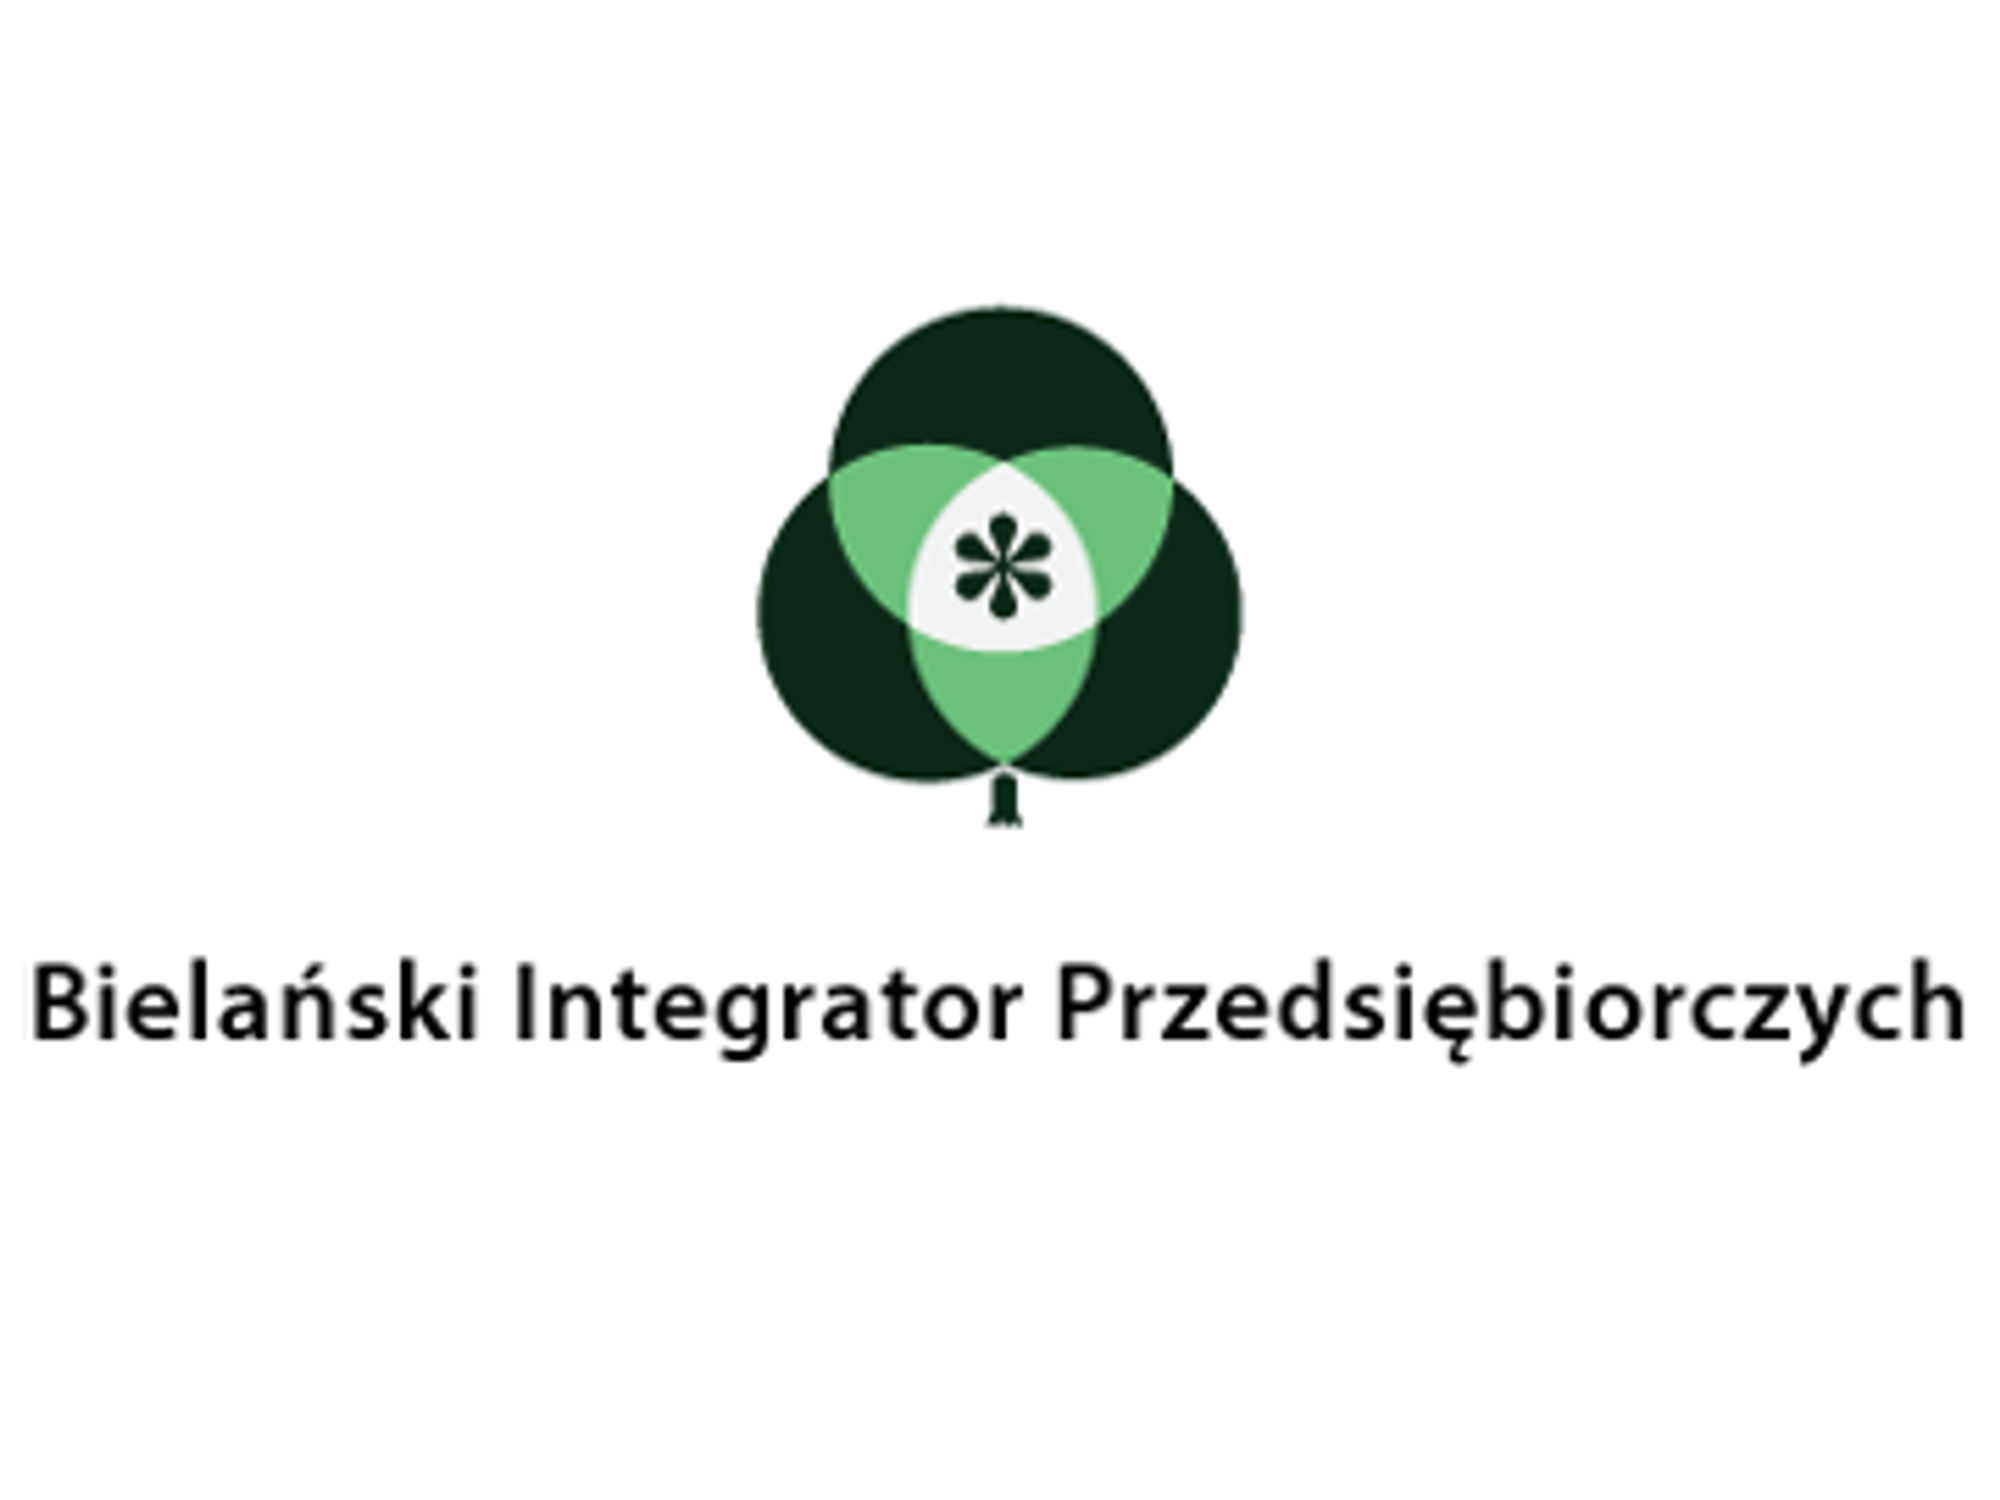 Bielański Integrator Logo.png